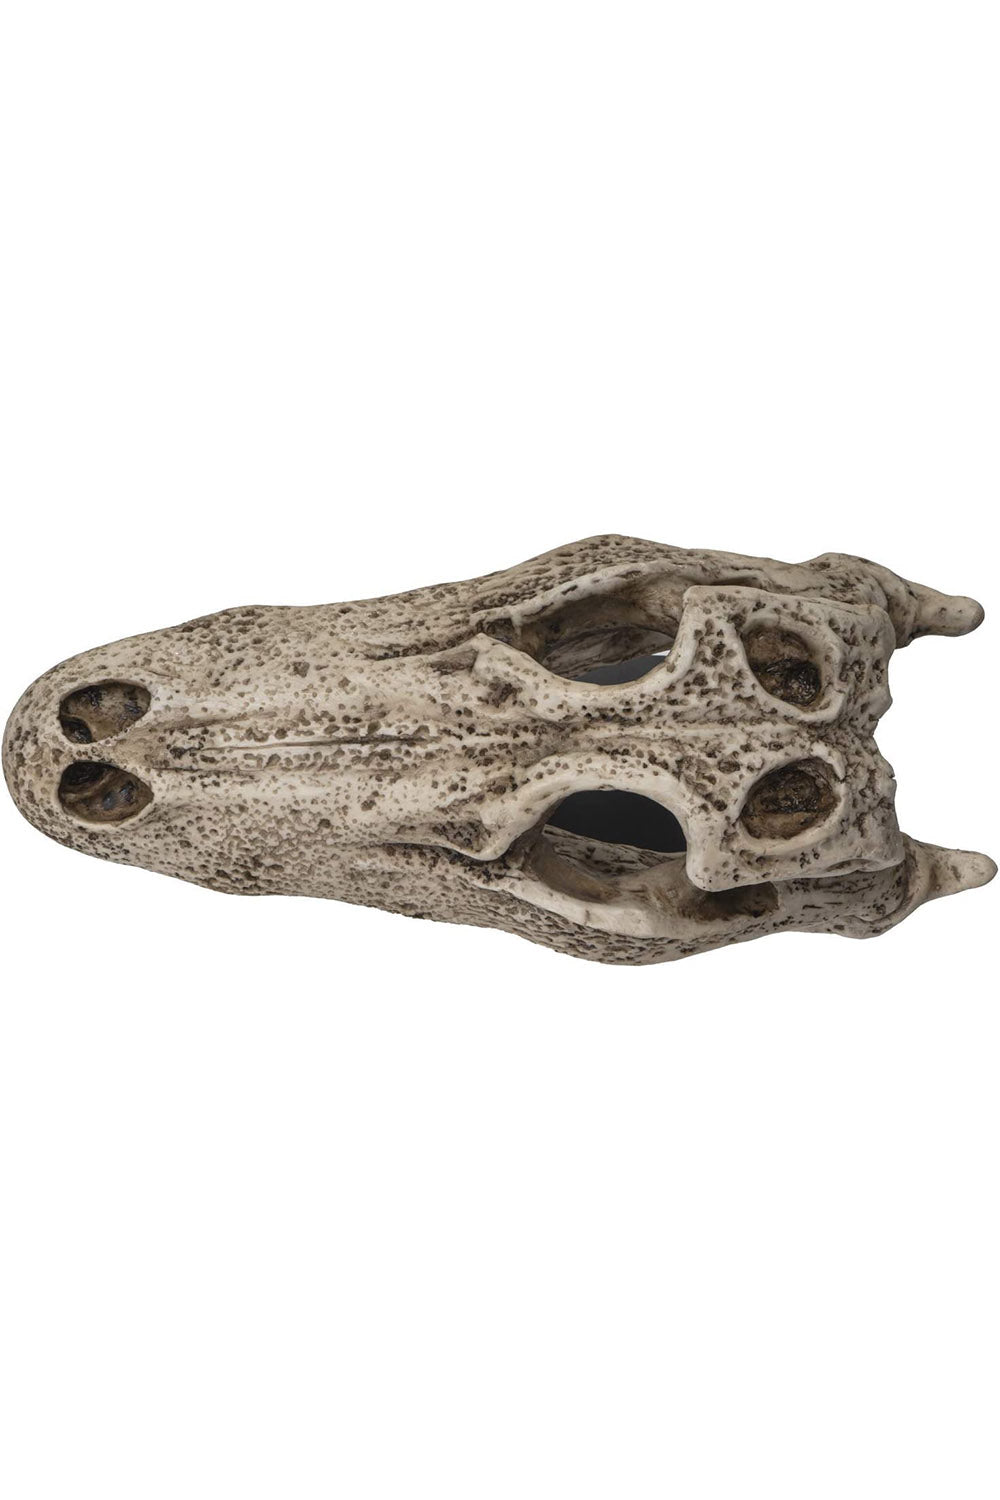 Aged Alligator Skull Replica